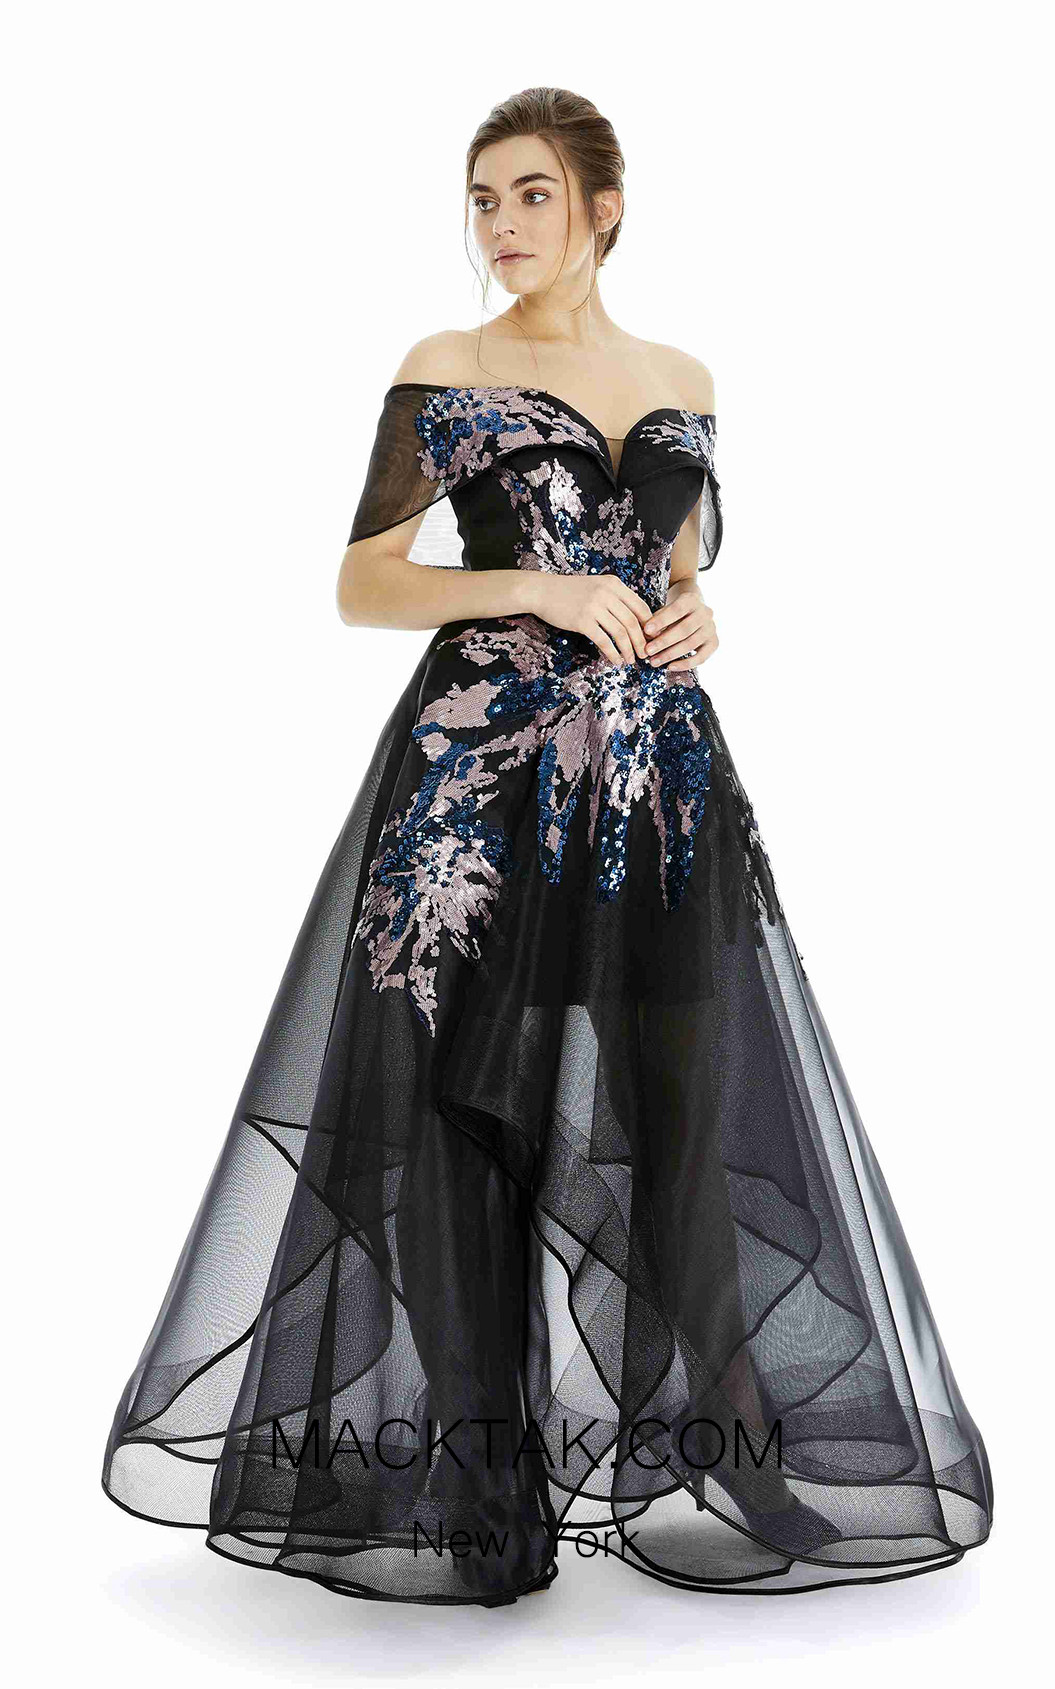 MackTak Couture 4636 Dress